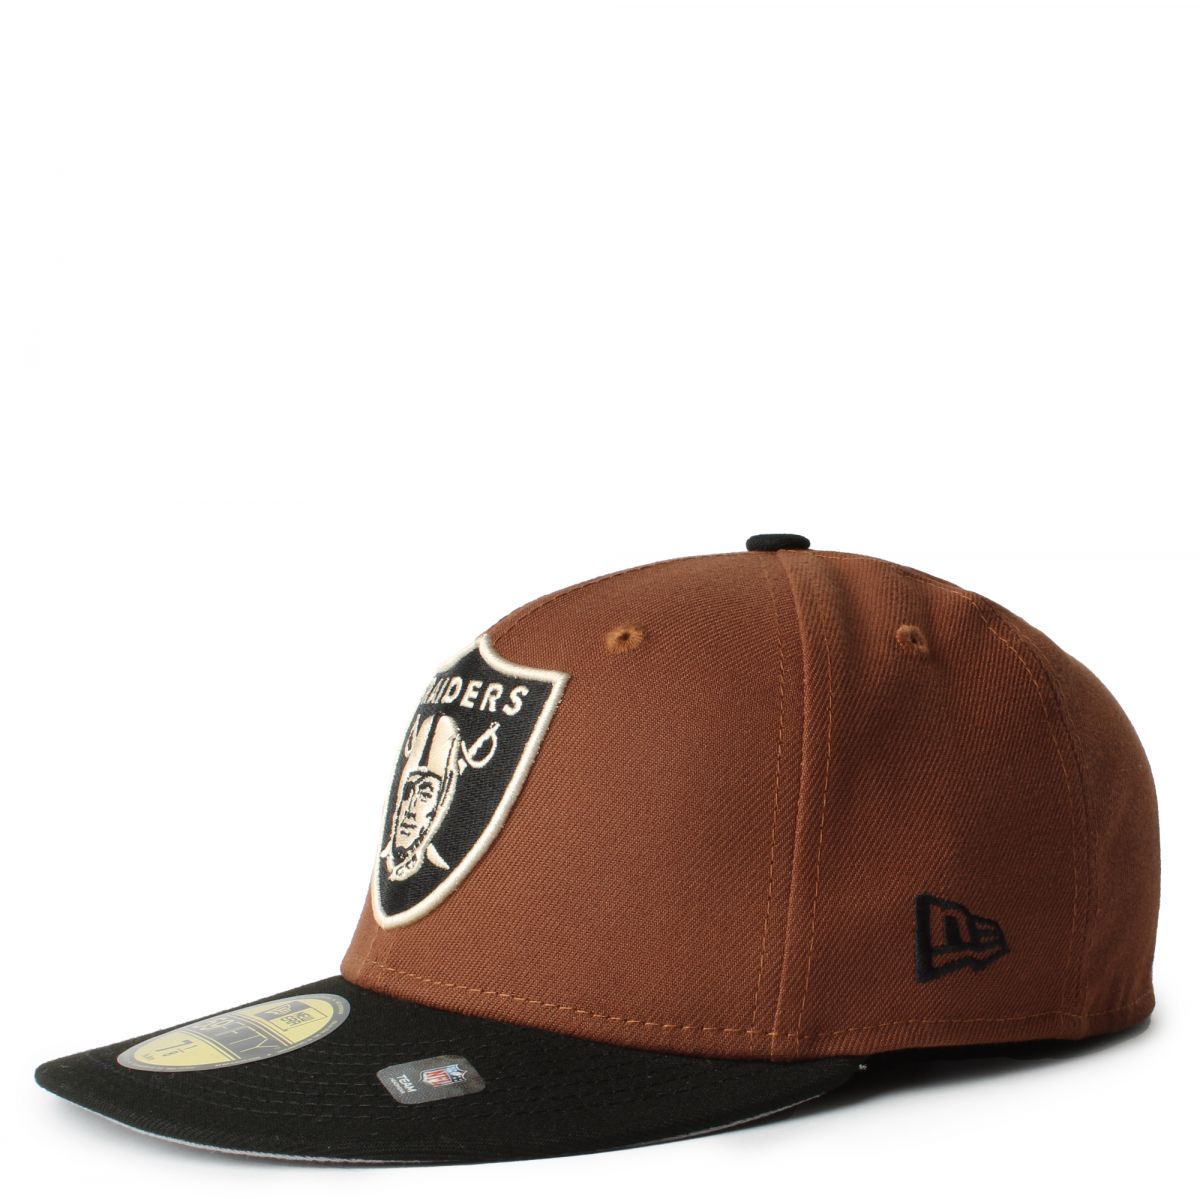 New Era 59FIFTY Las Vegas Raiders Harvest Brown Black Fitted Hat